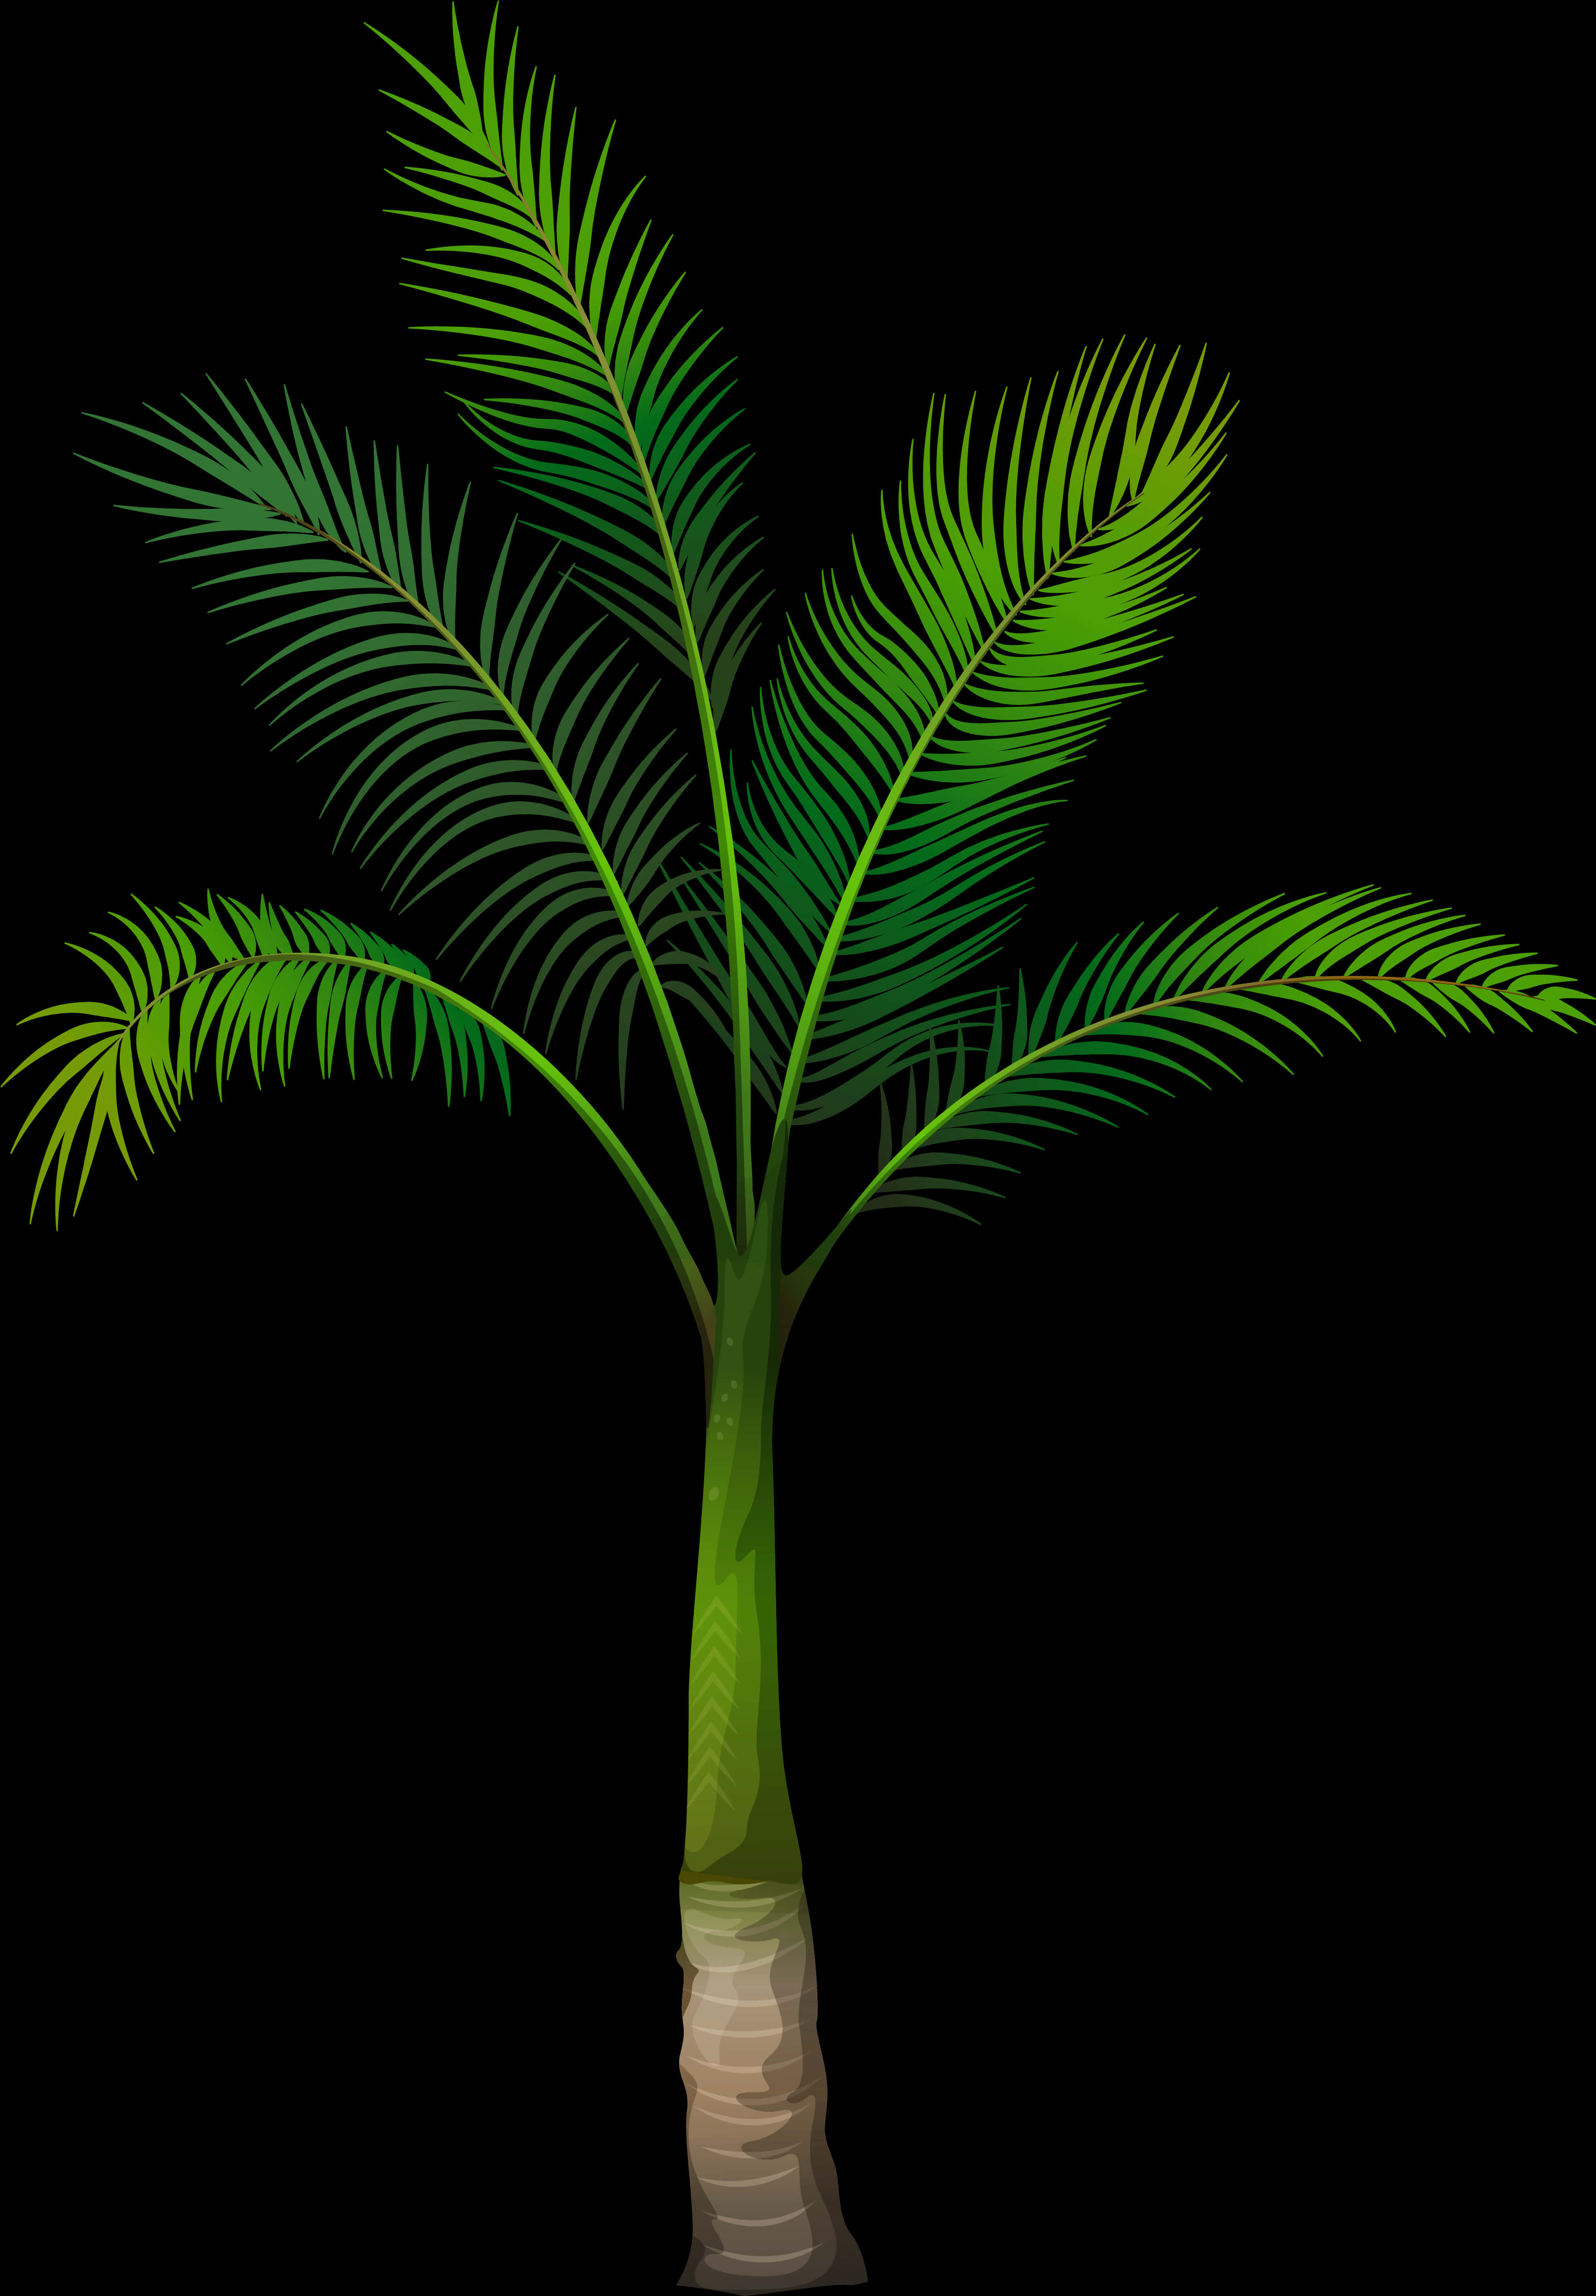 Vibrant Green Palm Tree Illustration PNG